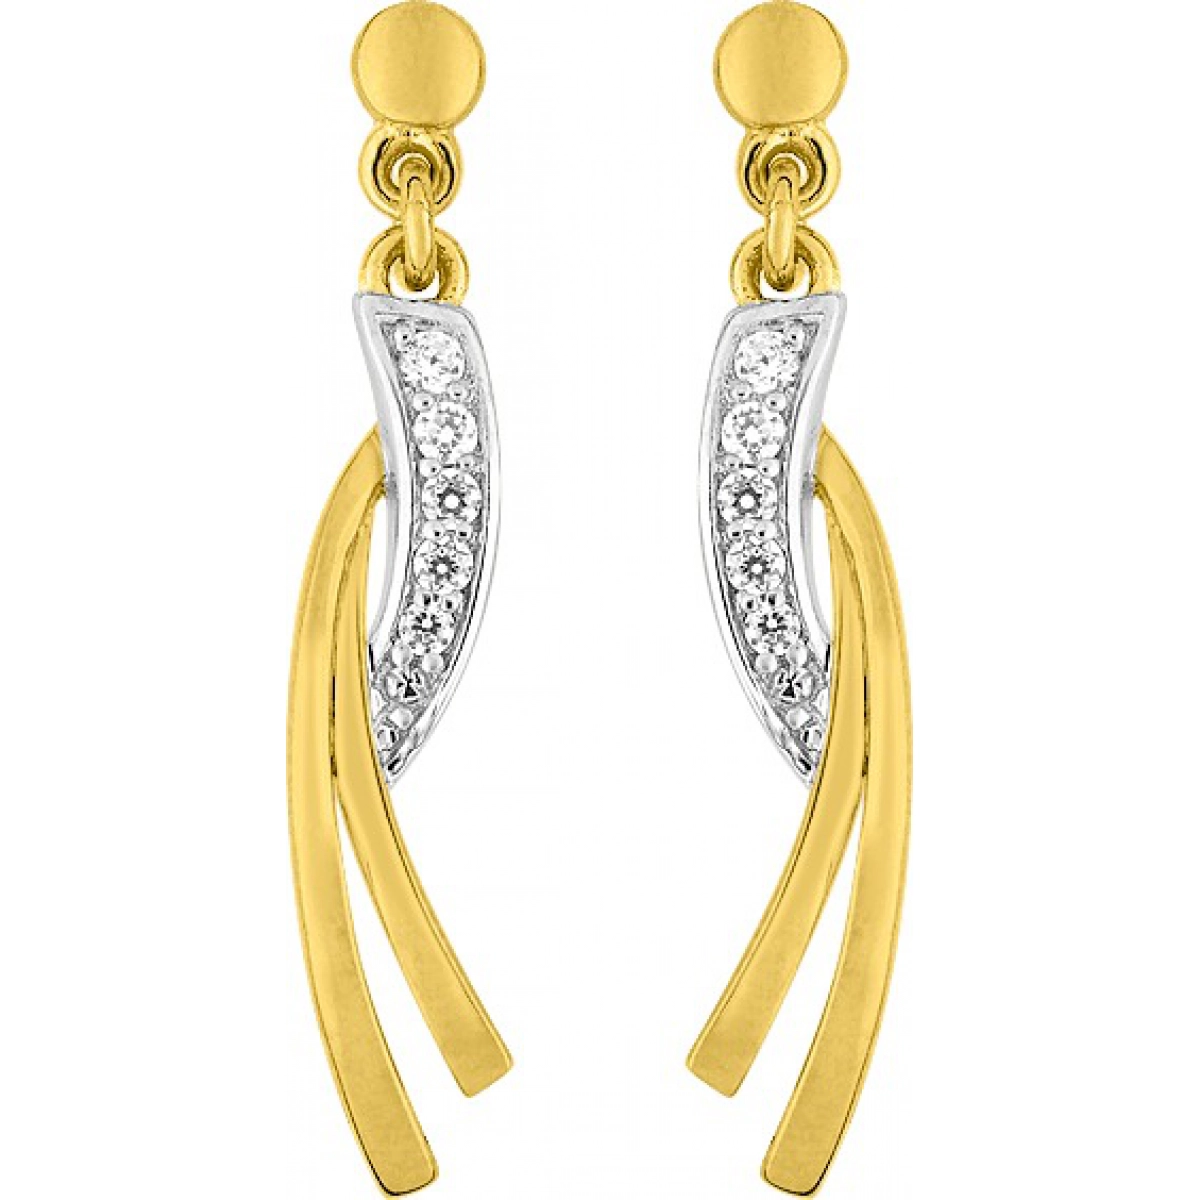 Earrings pair w. cz gold plated Brass 2TG  Lua Blanca  BSWQ17Z.0